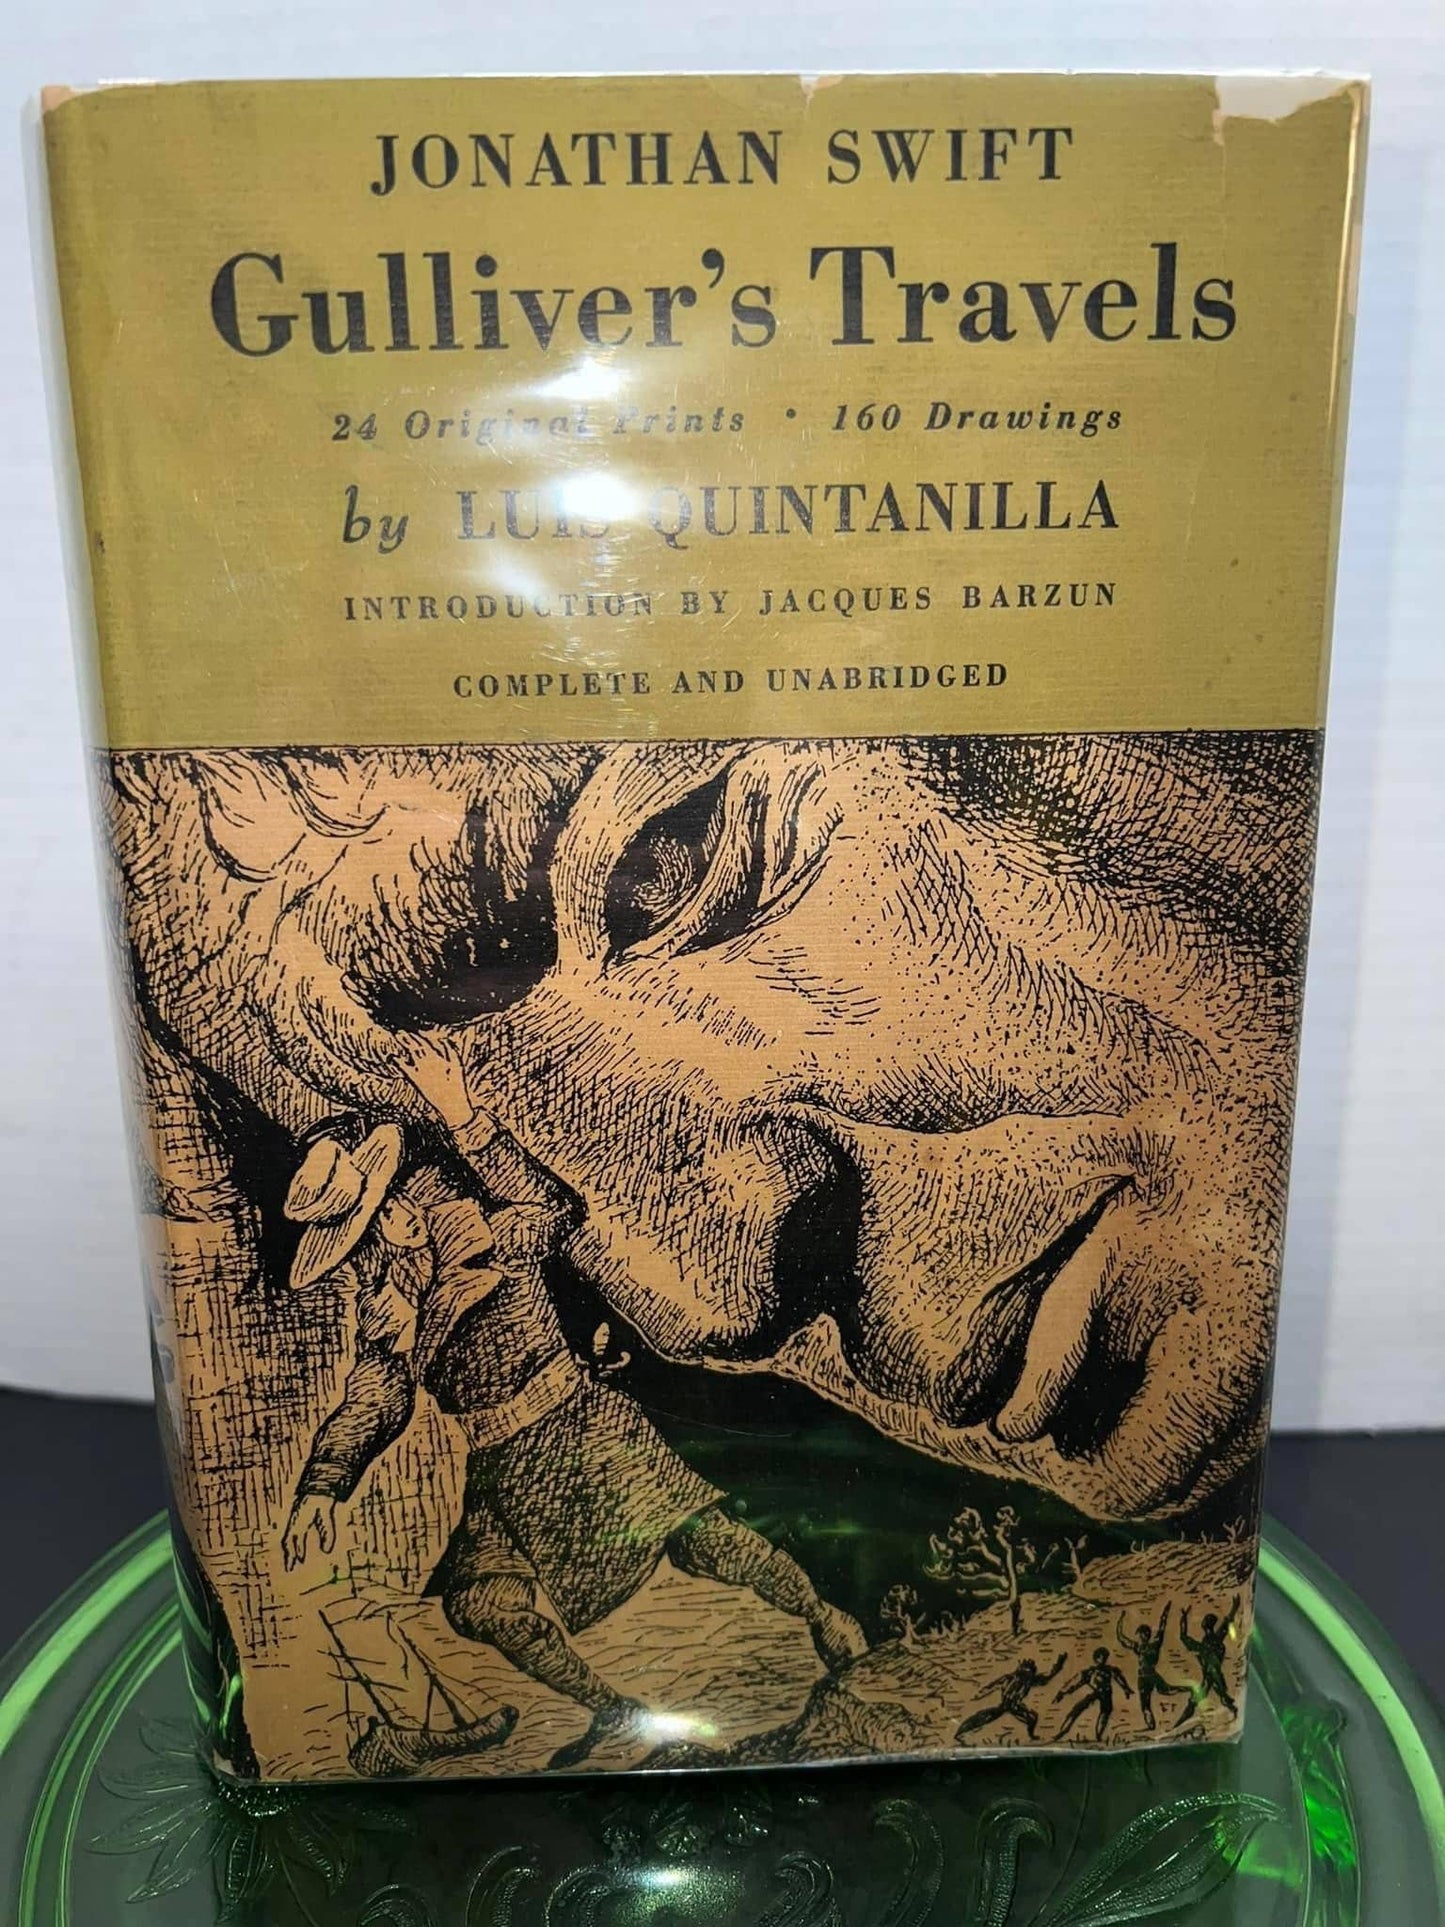 Vintage fairy tale Gulliver’s travels 24 original prints 160 drawings - Luis quintanilla 1947